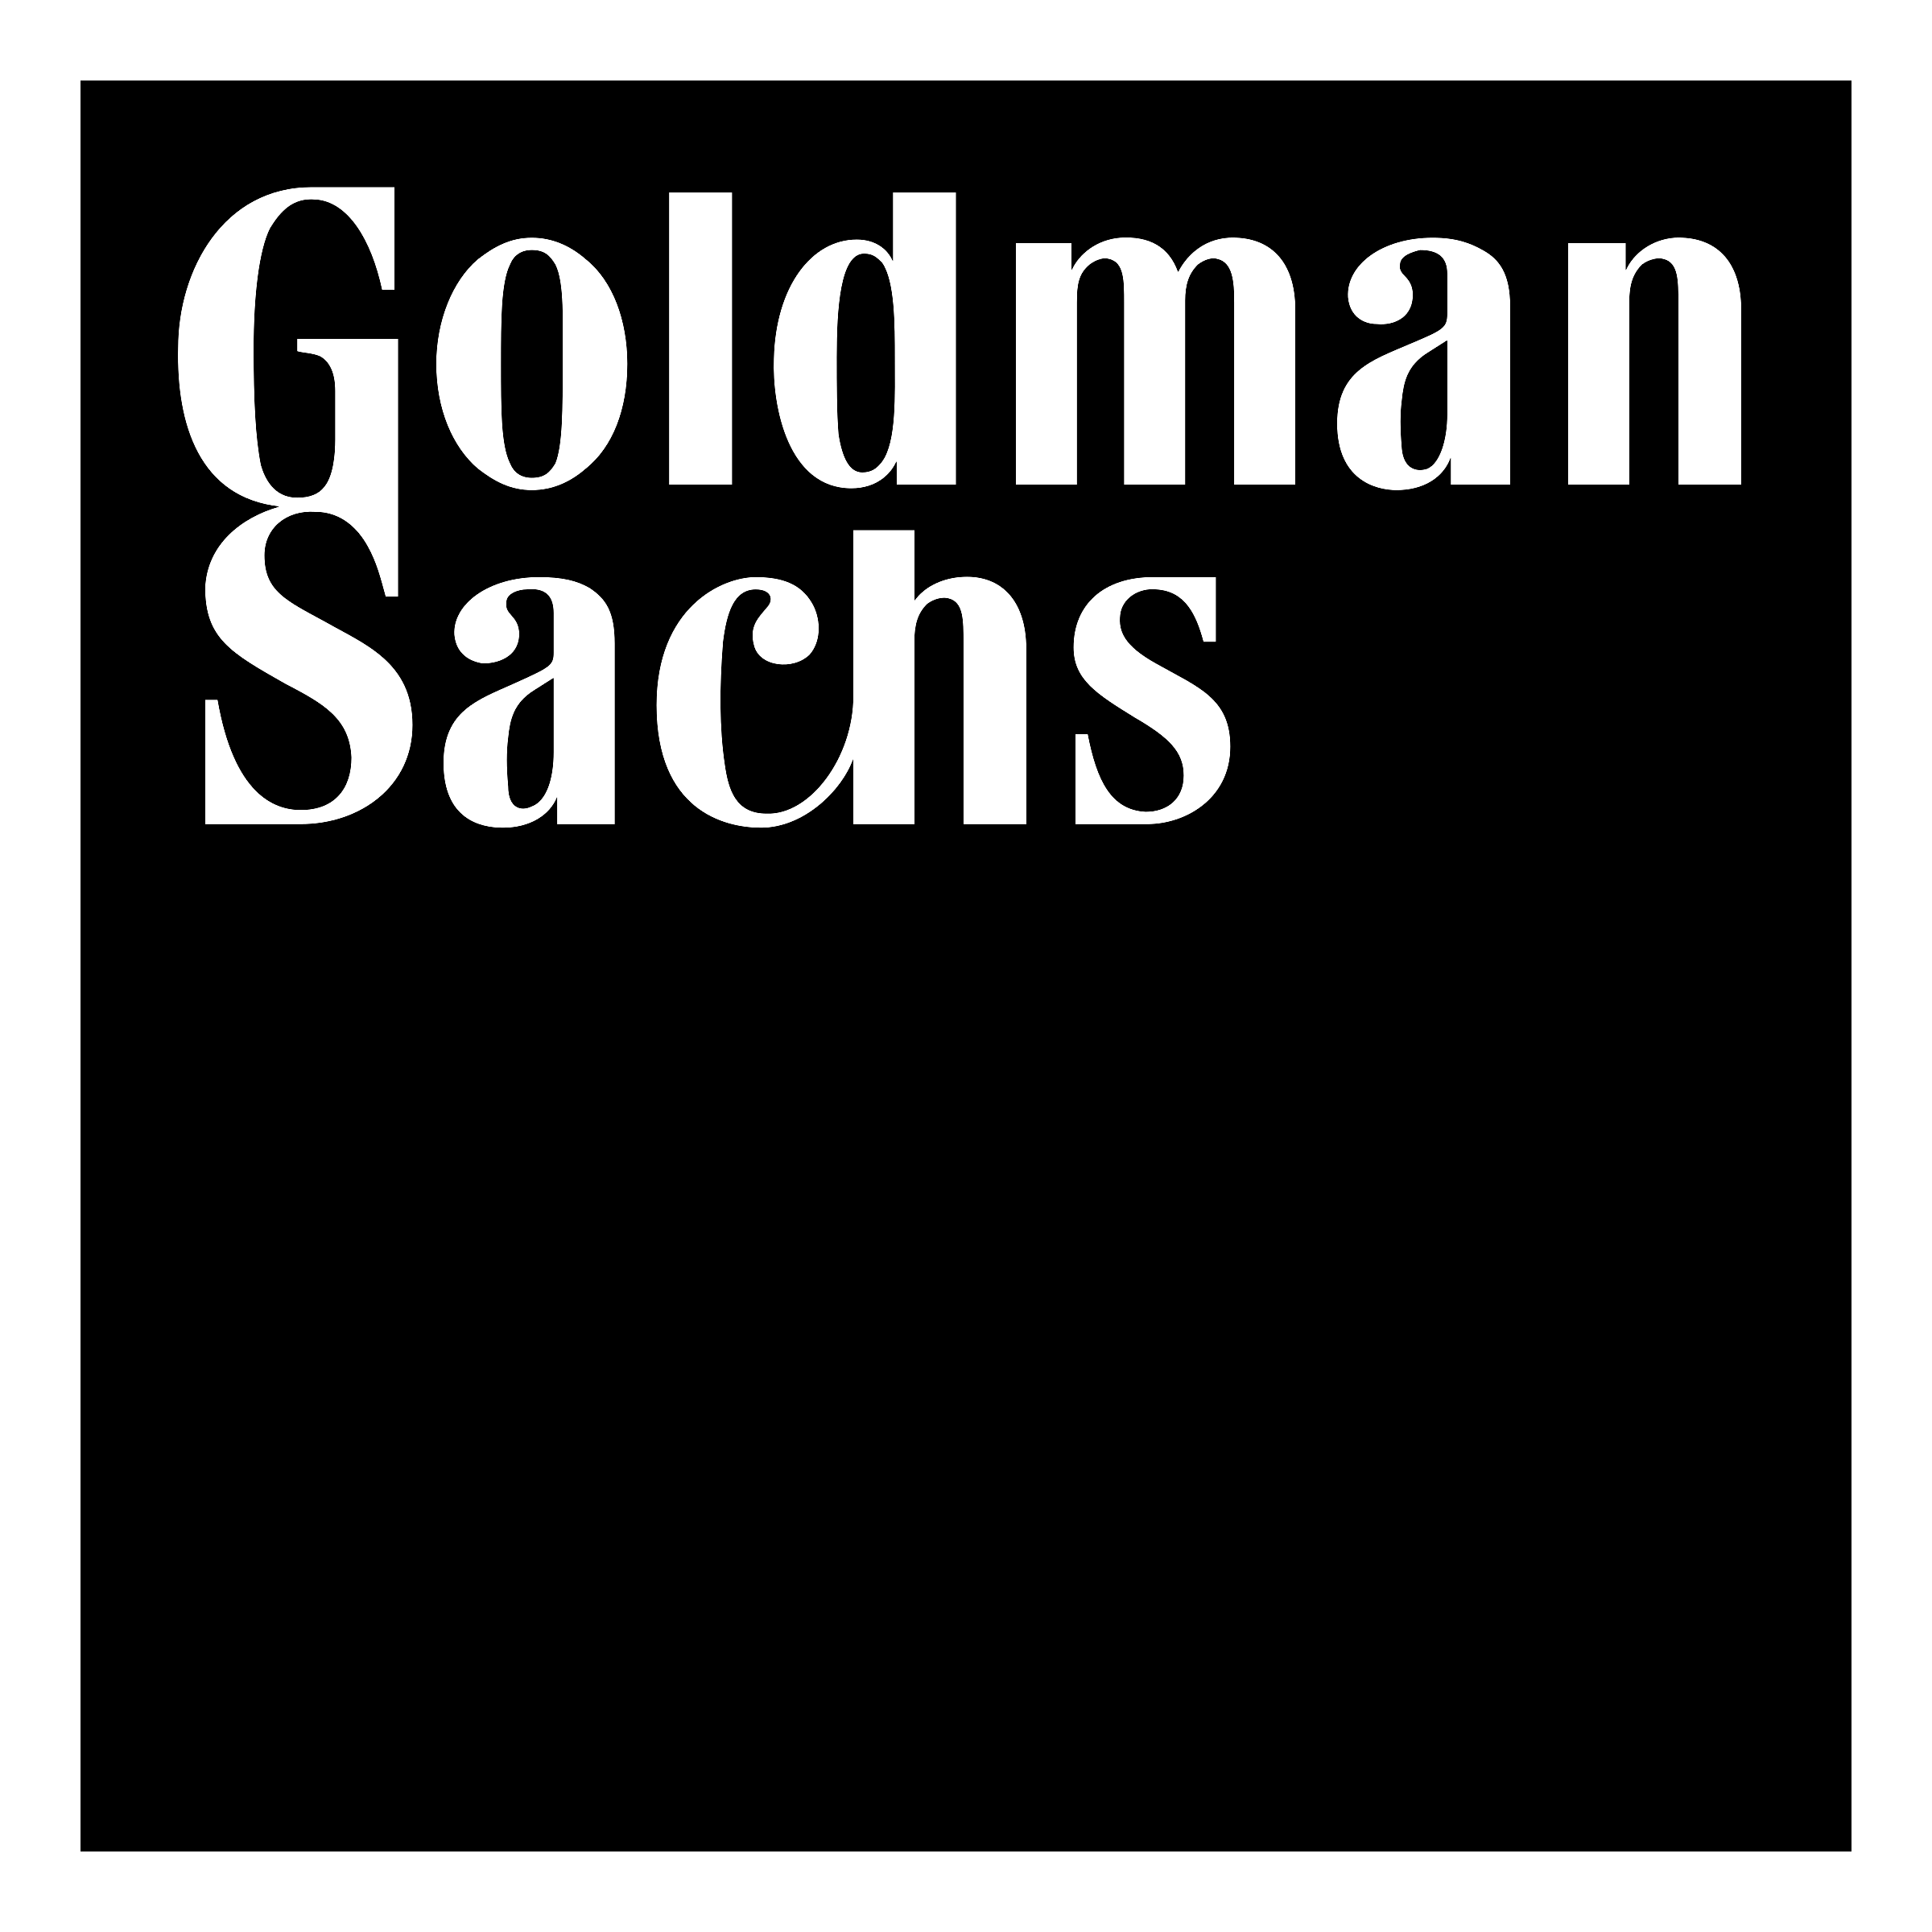 Goldman Sachs Logo - Goldman Sachs Logo PNG Transparent & SVG Vector - Freebie Supply